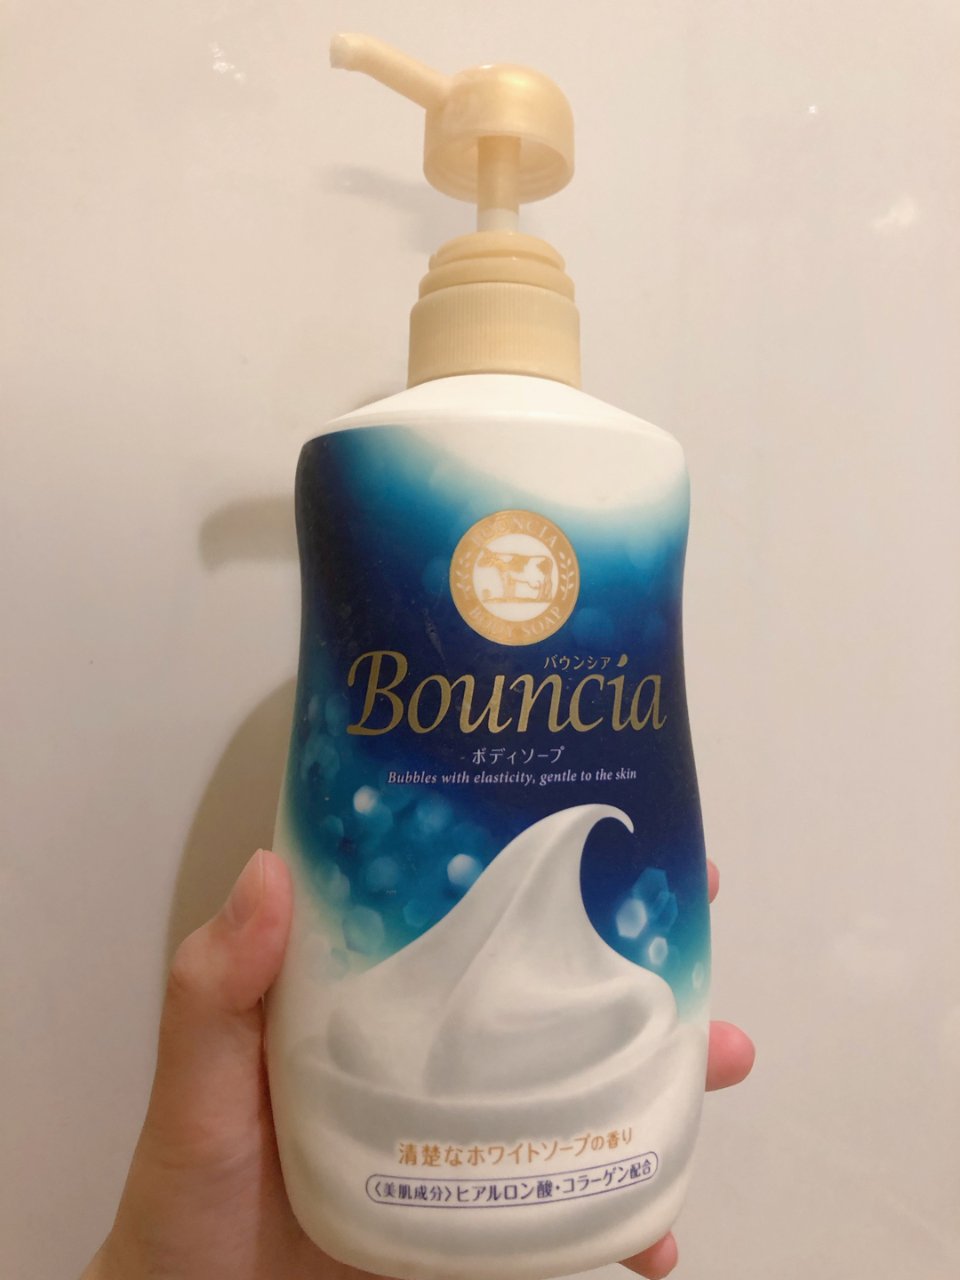 Bouncia沐浴露/真的很香很好用啦...